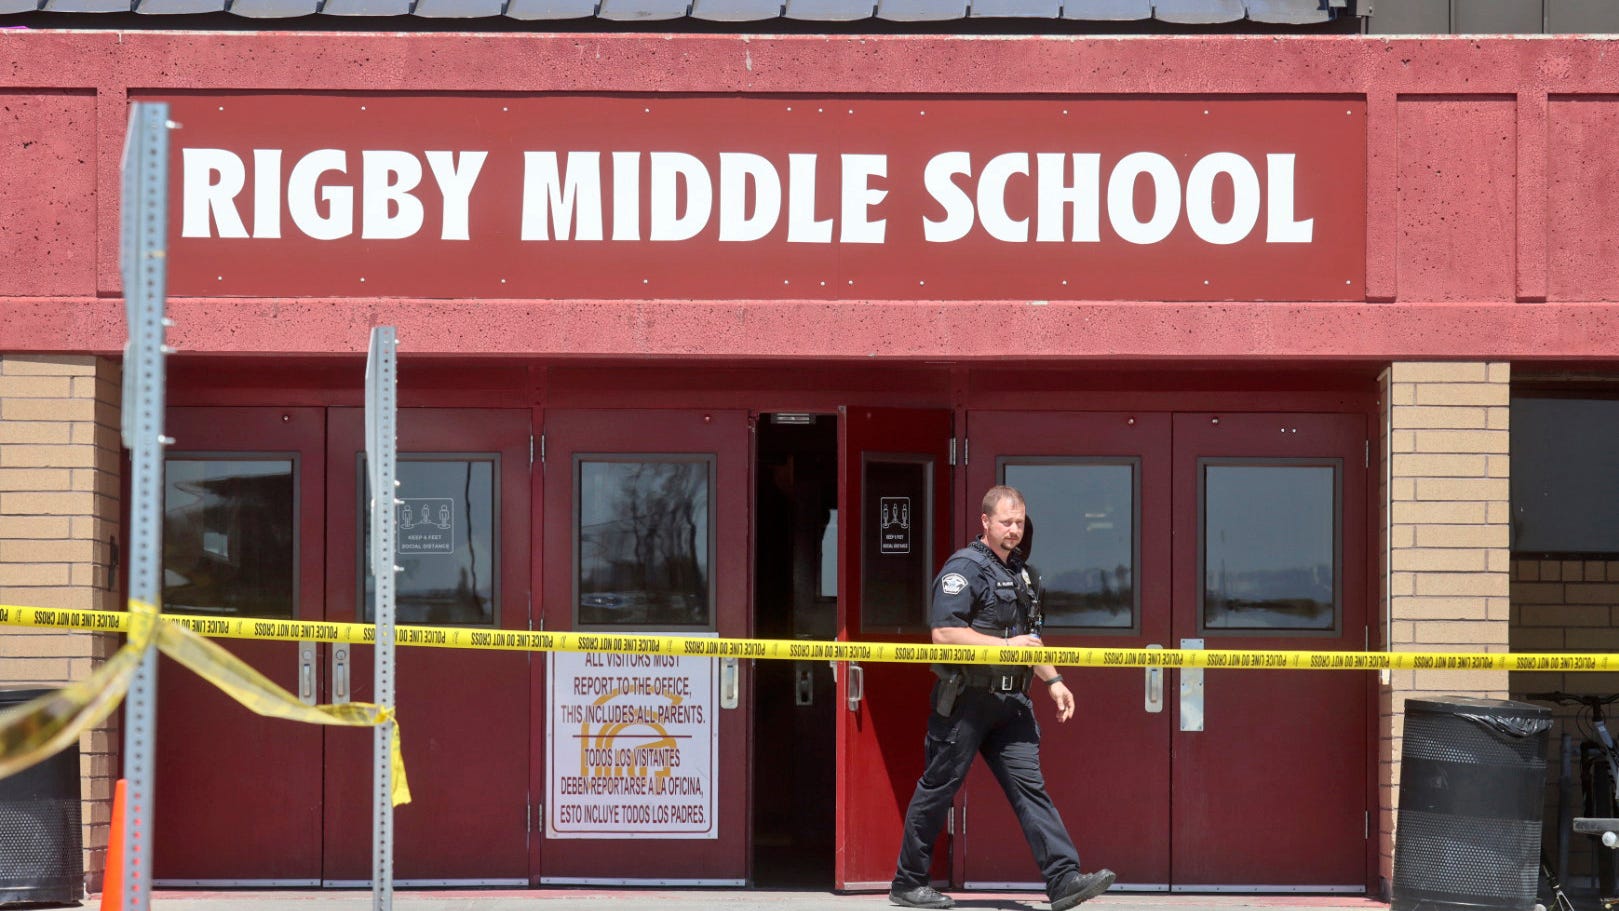 Rigby Middle School shooting in Idaho 3 injured; student in custody